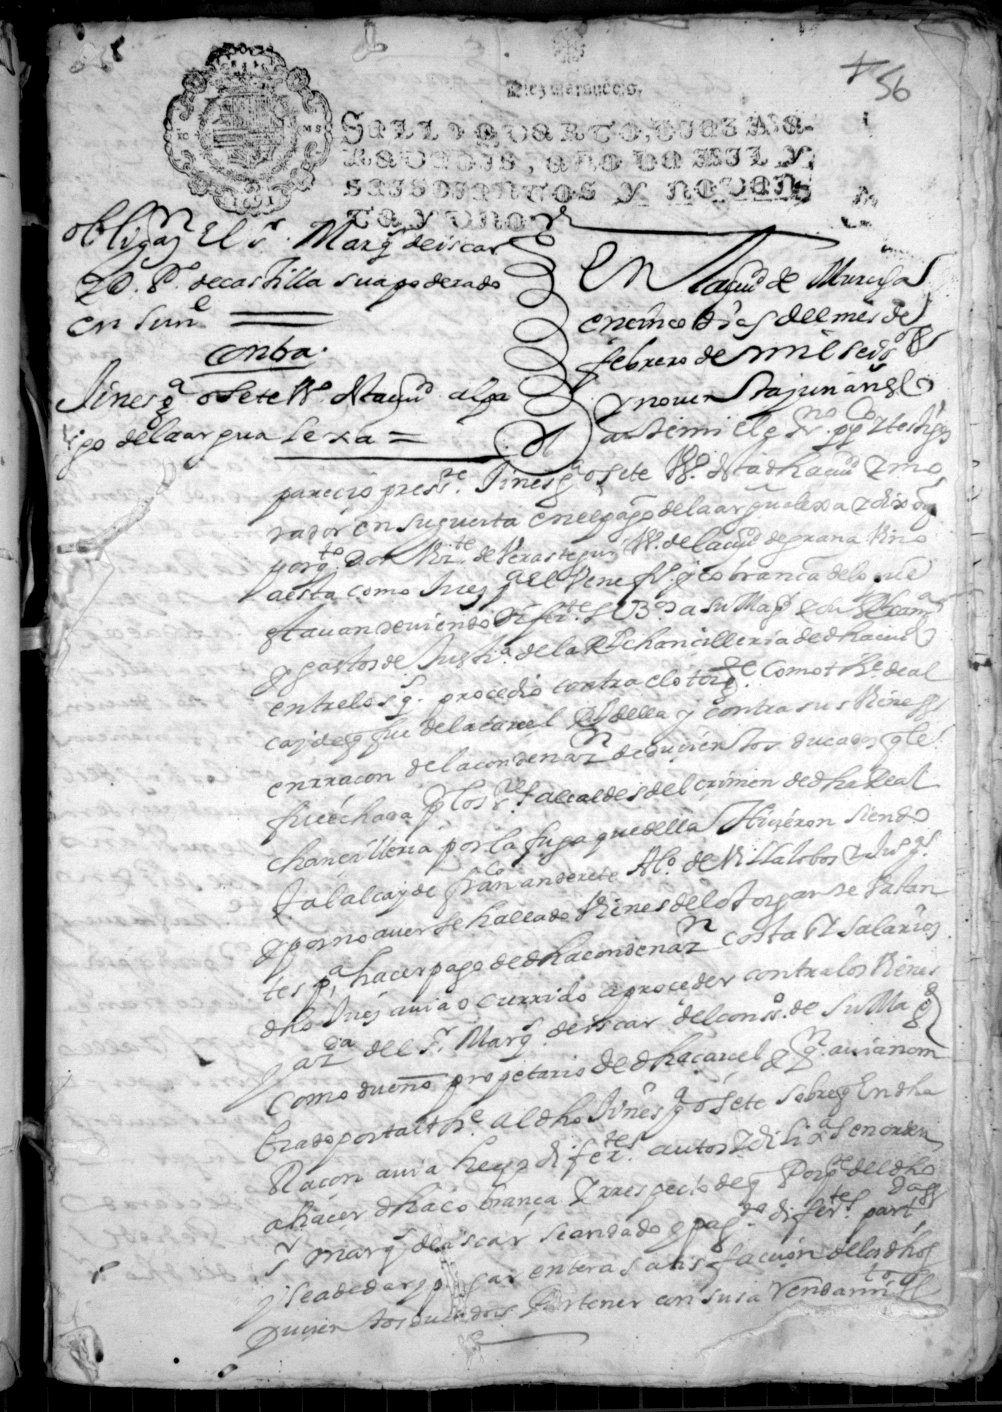 Registro de Francisco Jiménez, Murcia de 1691.